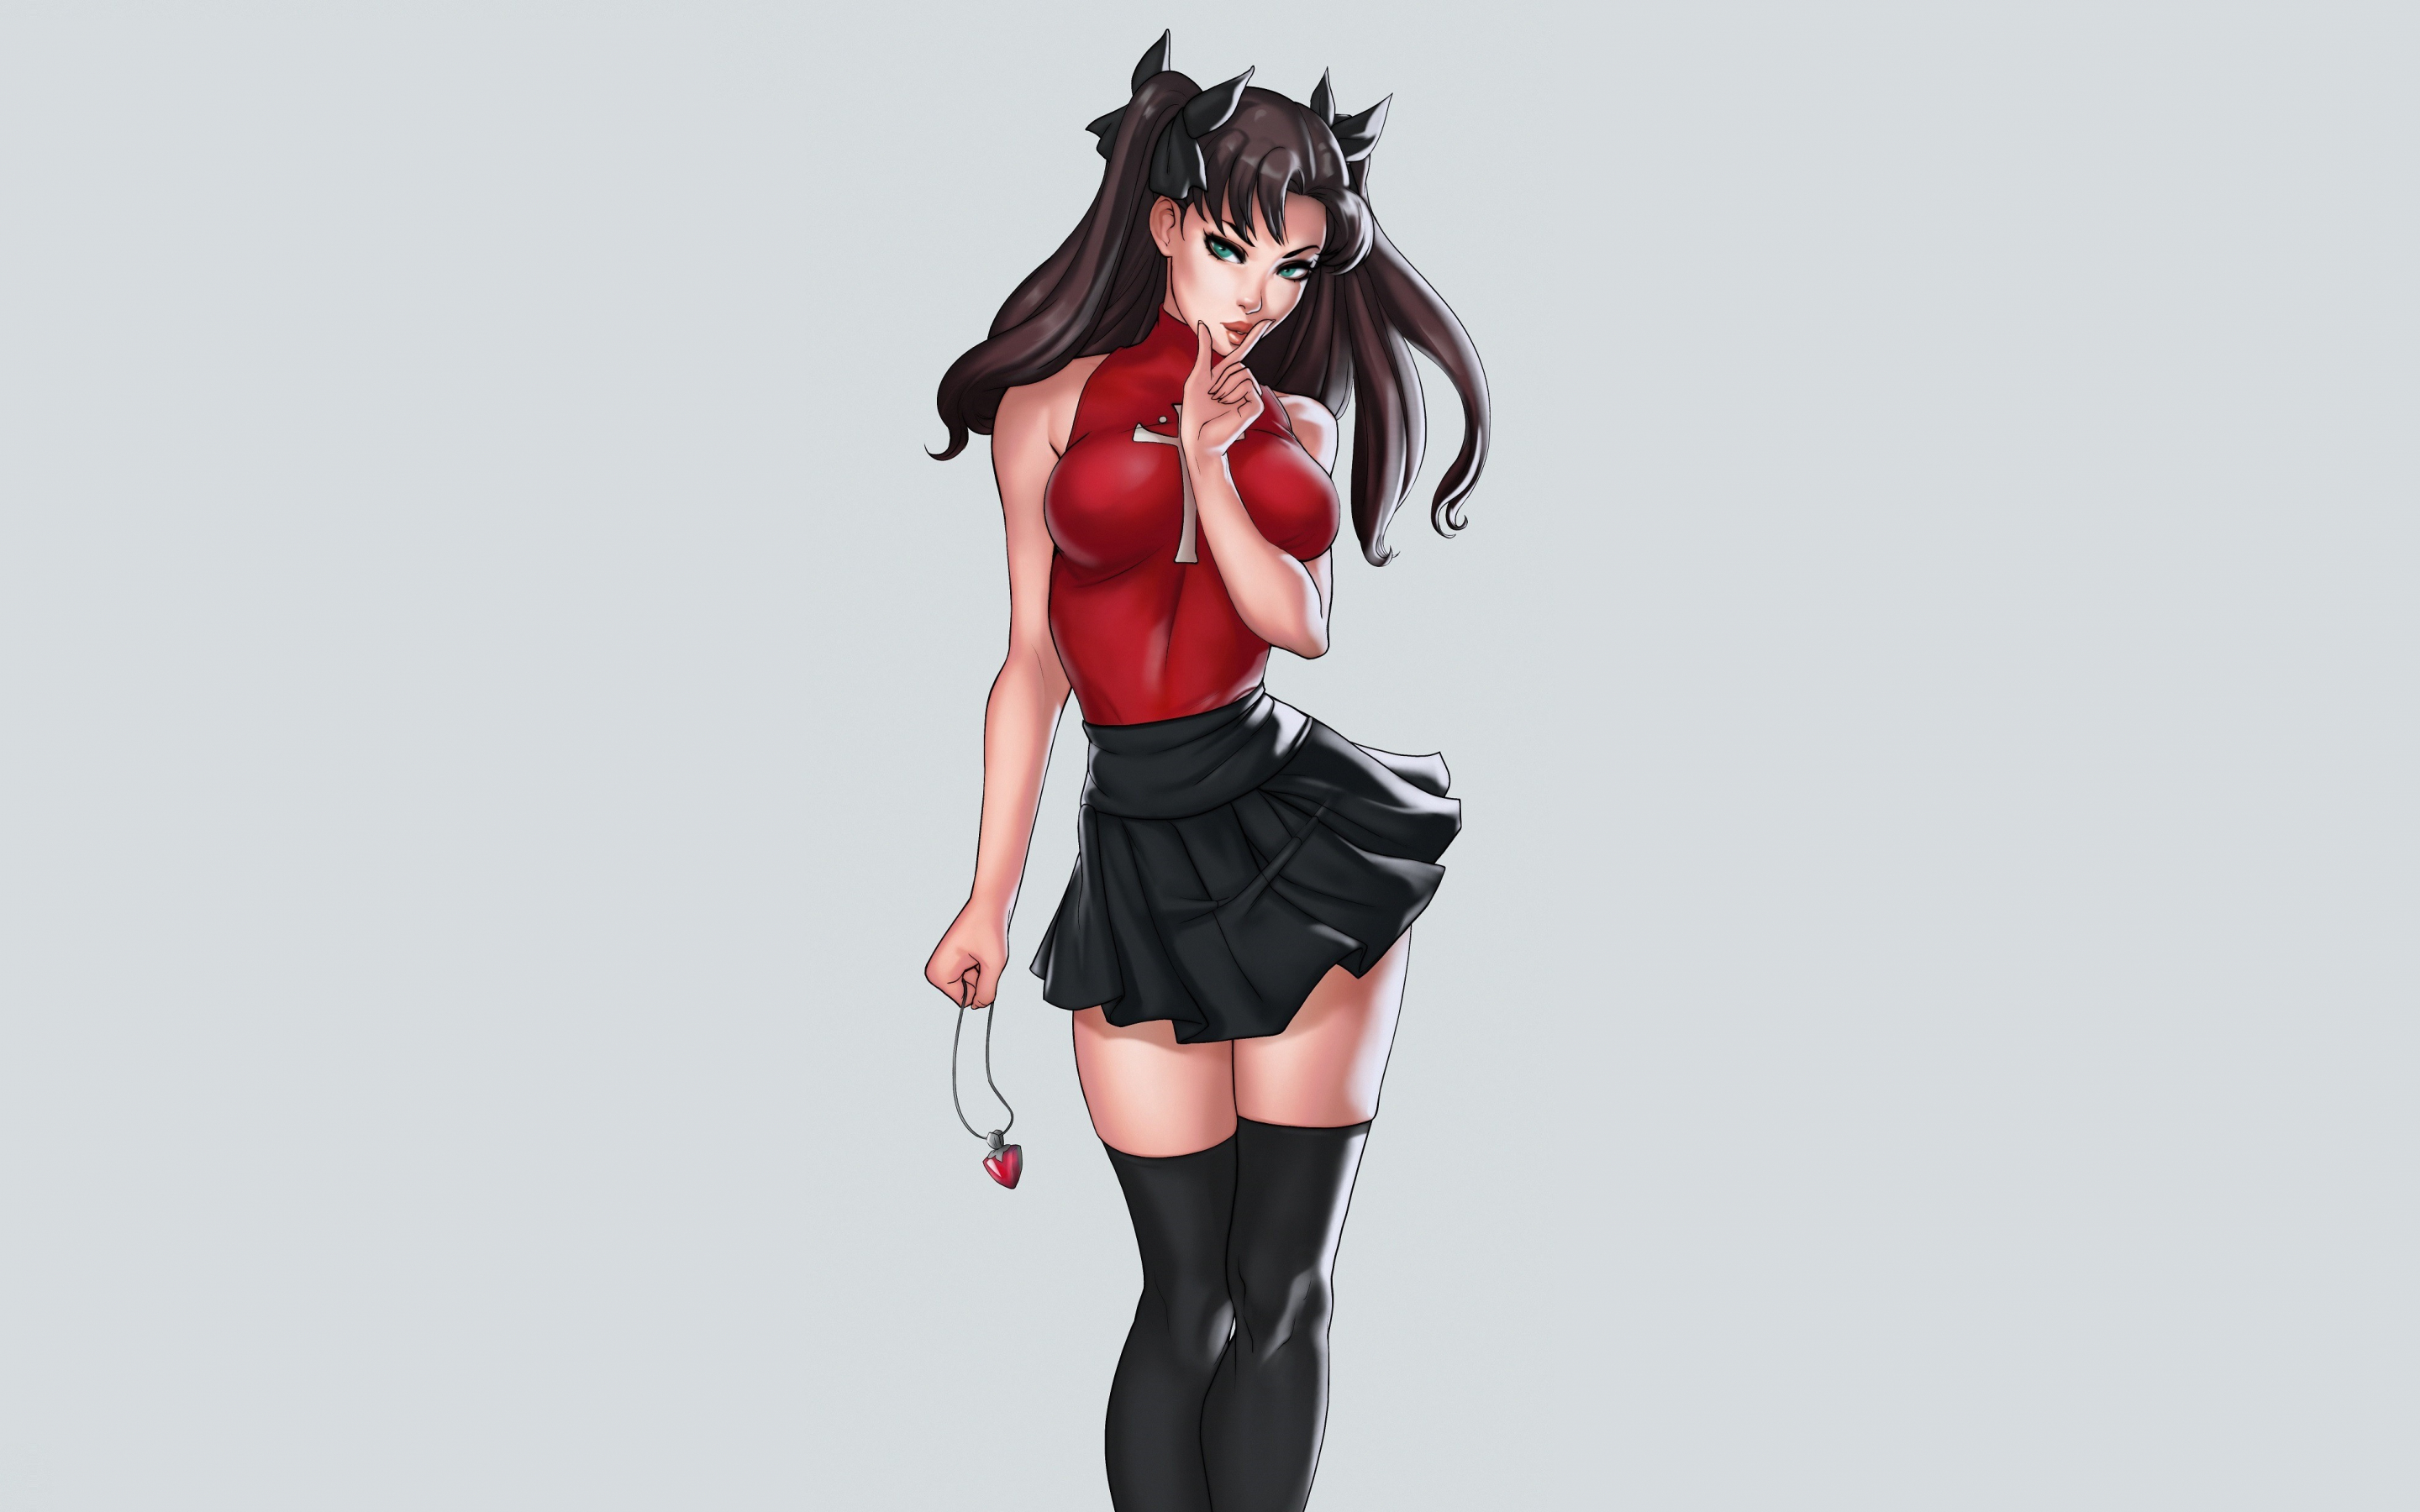 Hot Rin Tohsaka, Fate/stay night, anime girl, 2880x1800 wallpaper